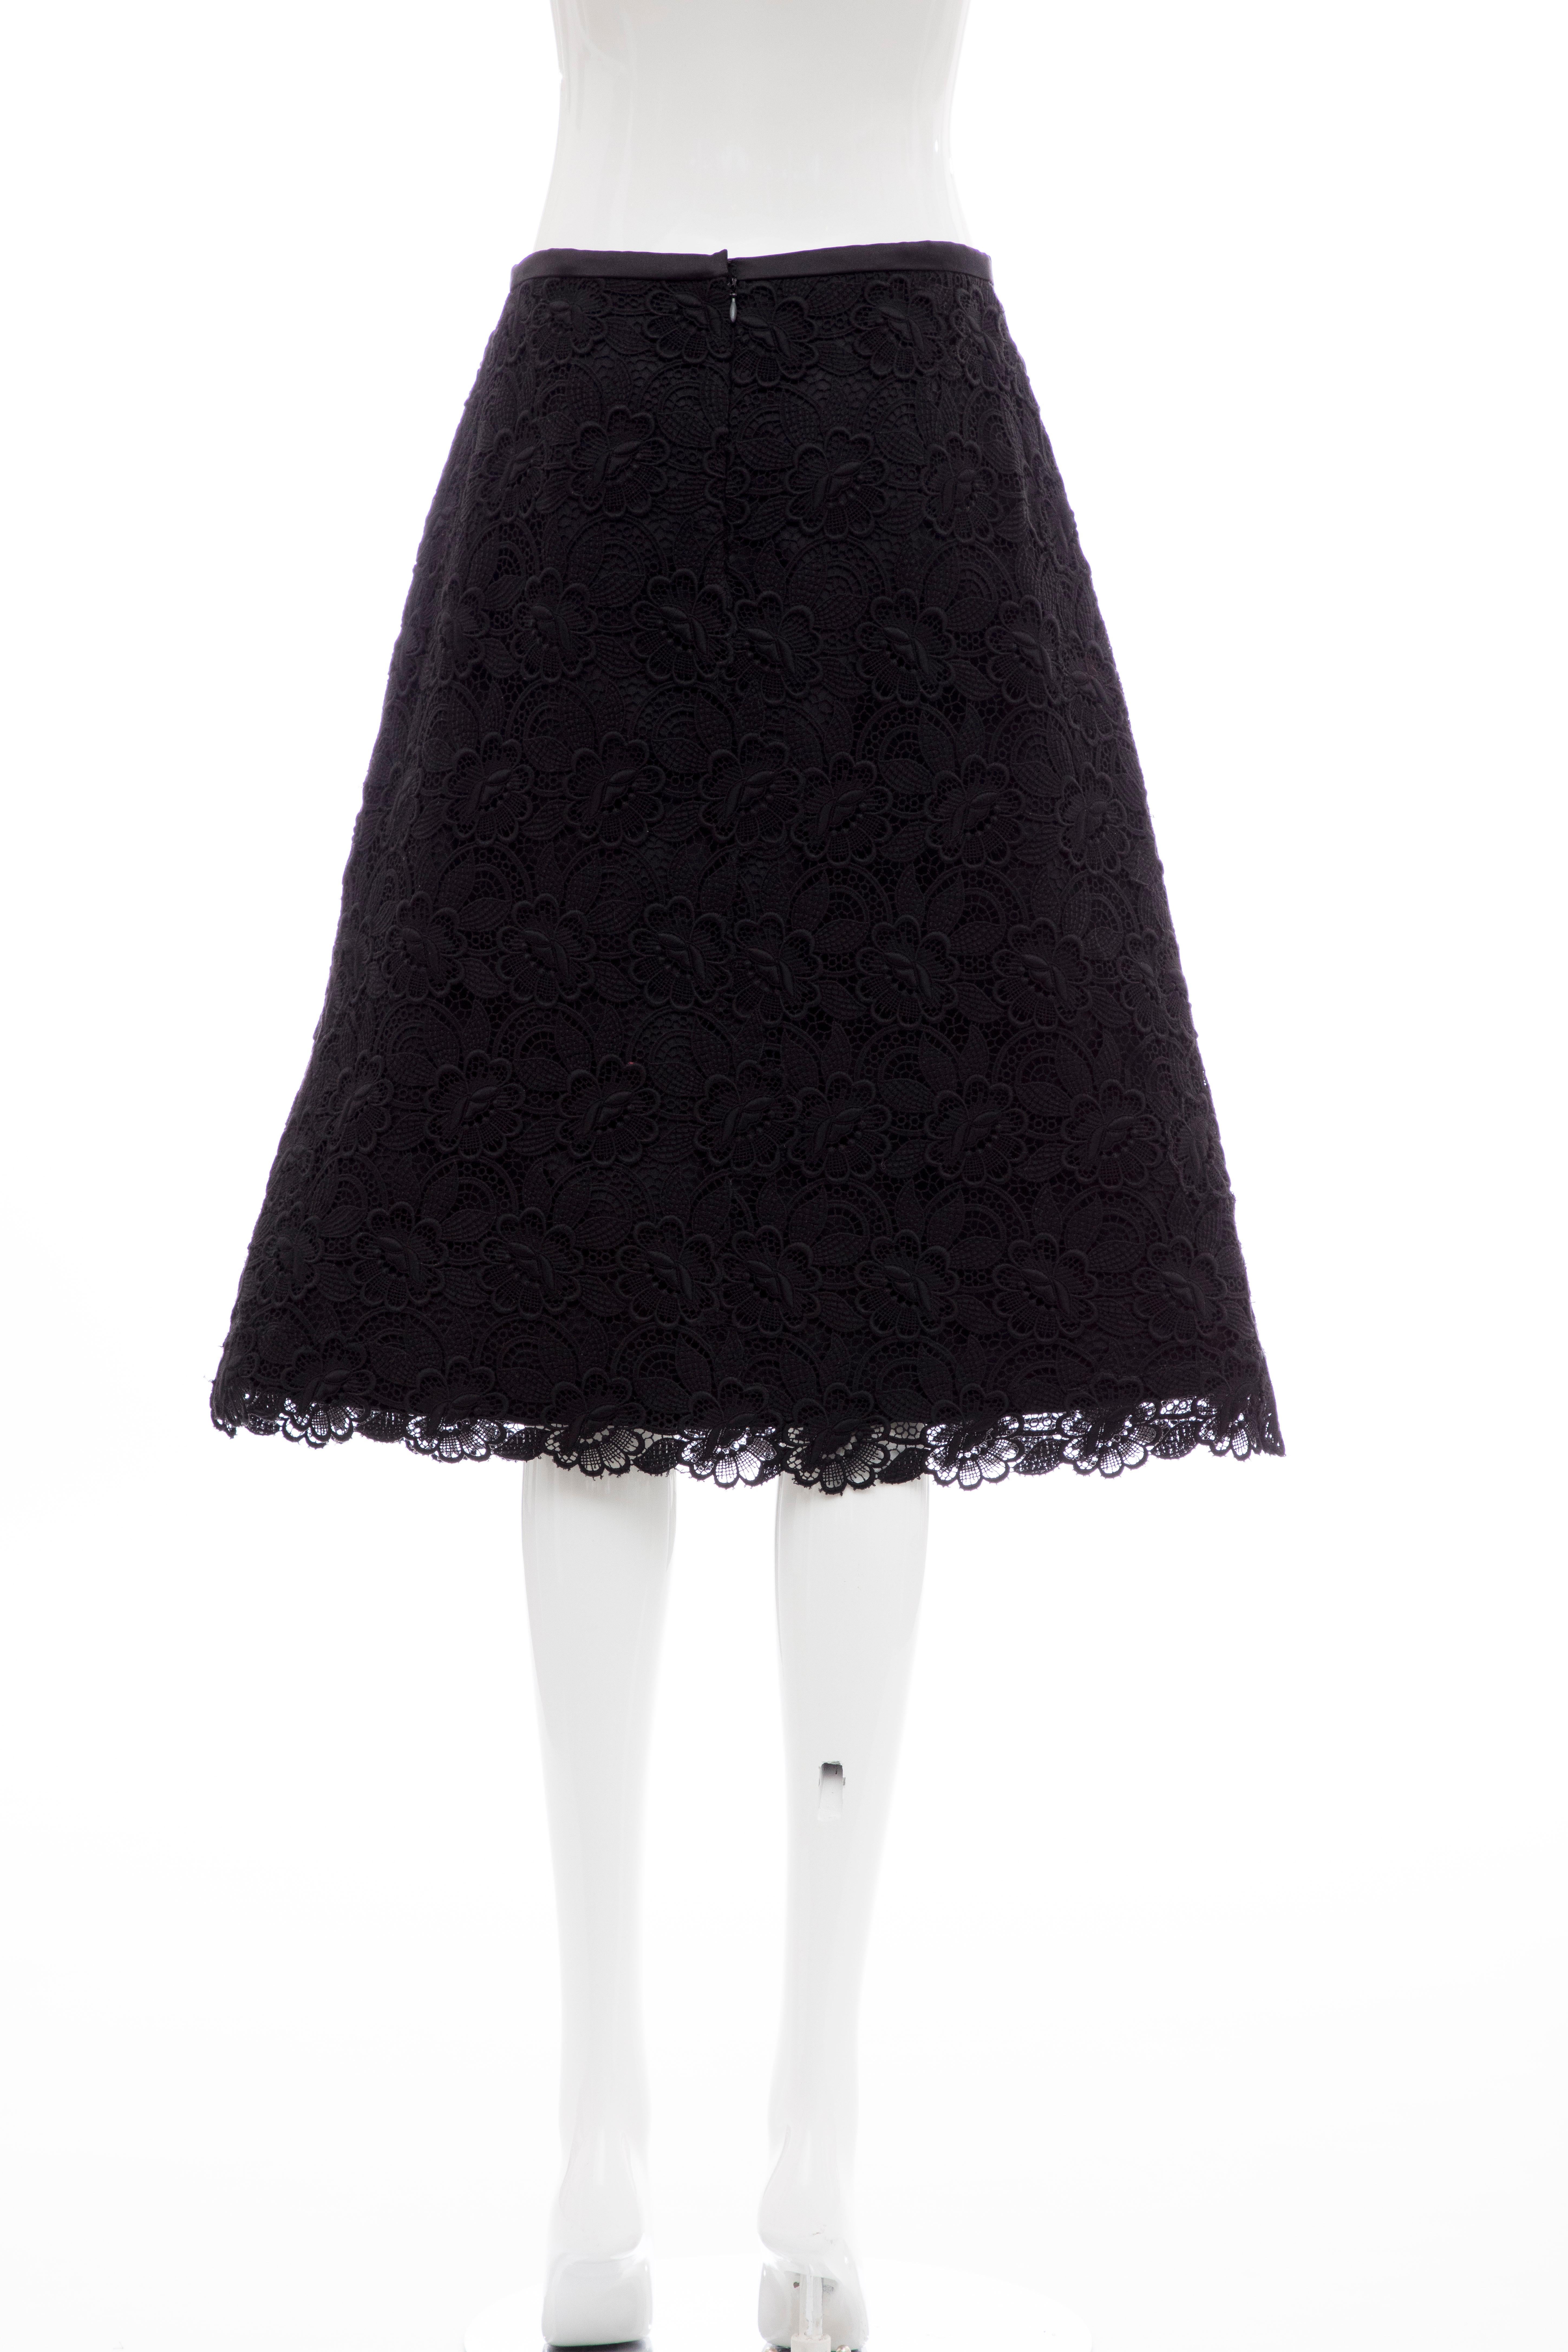 Alexander McQueen Black Silk Cotton Guipure Lace Evening Skirt, Fall 2006 For Sale 6